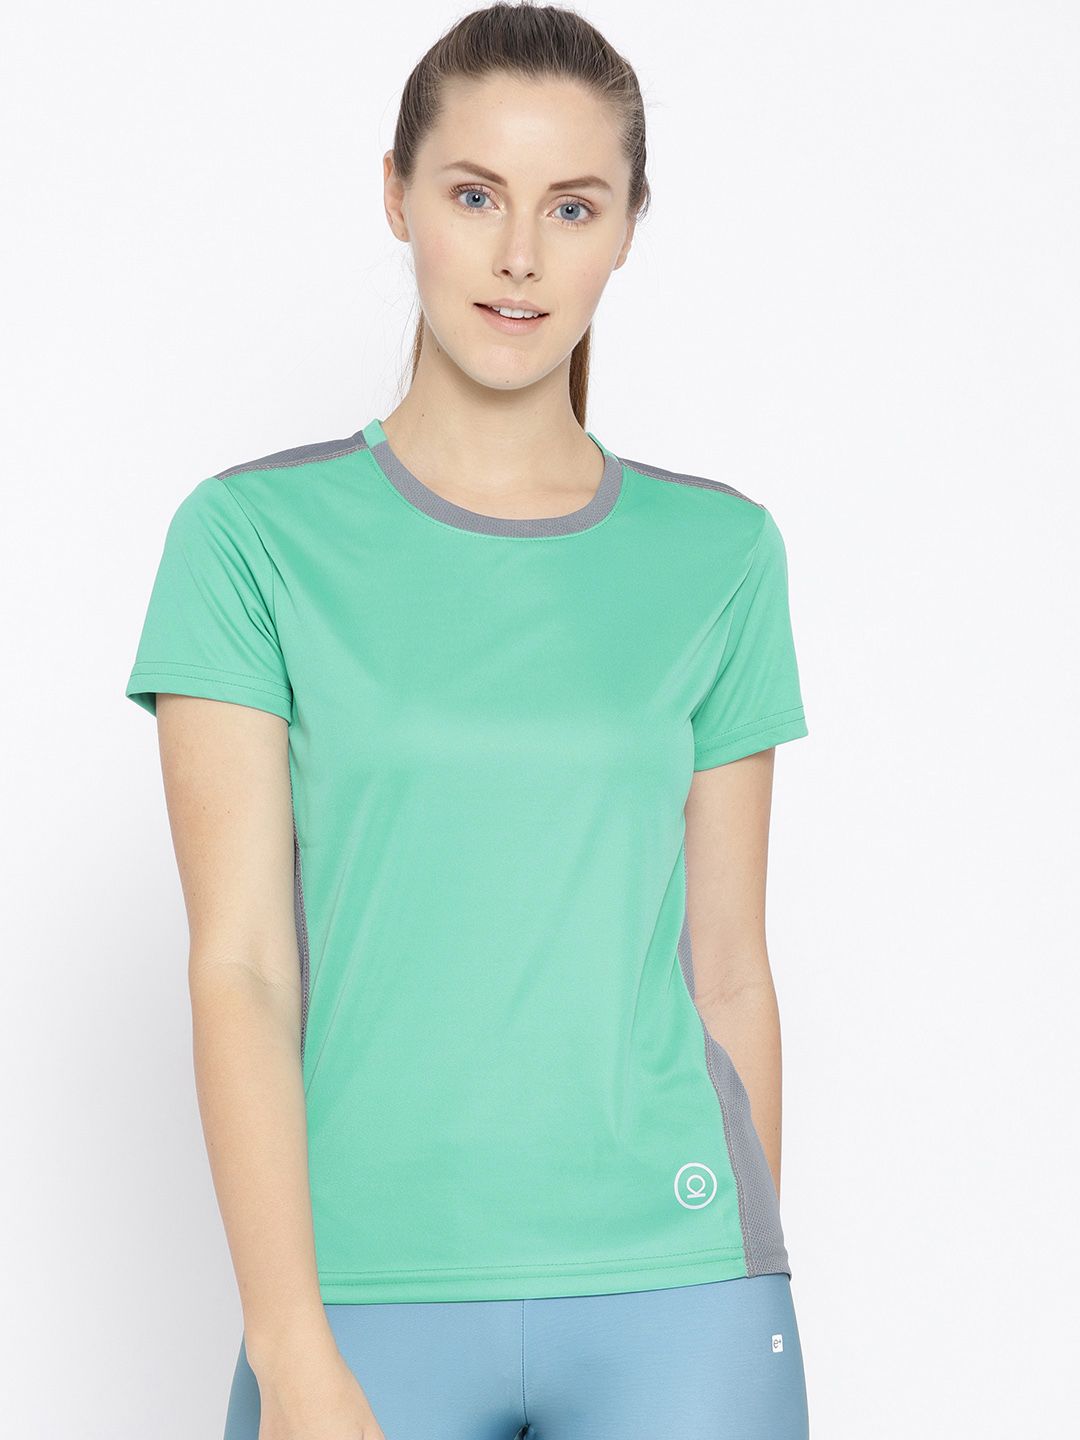 Chkokko Women Sea Green Solid Training T-shirt Price in India